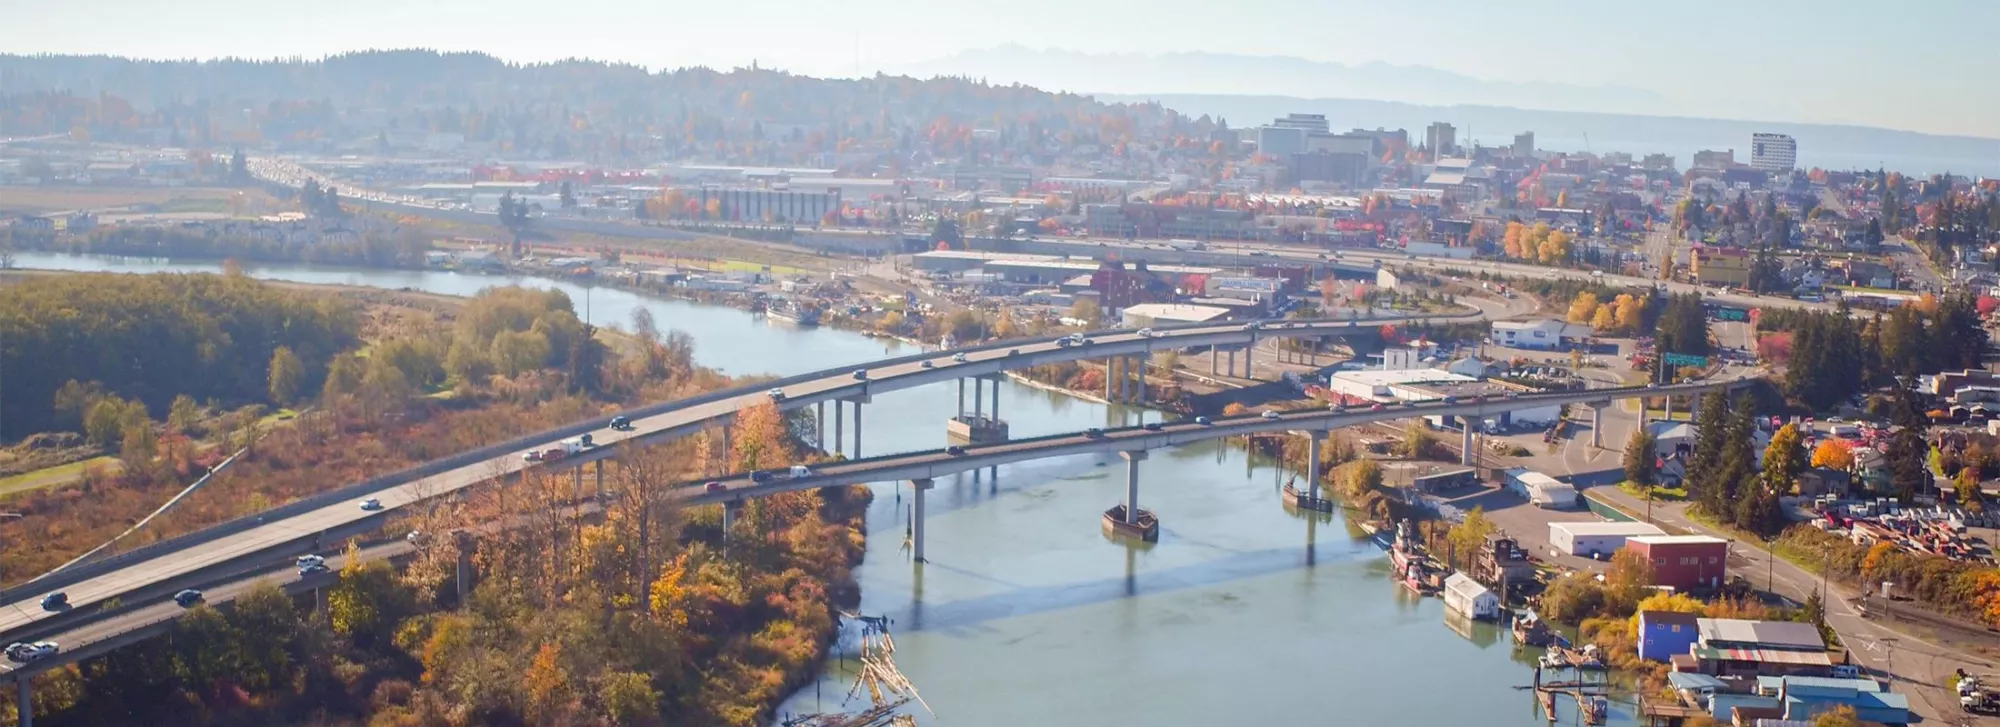 The city of Everett Washington with a bridge and a cityscape